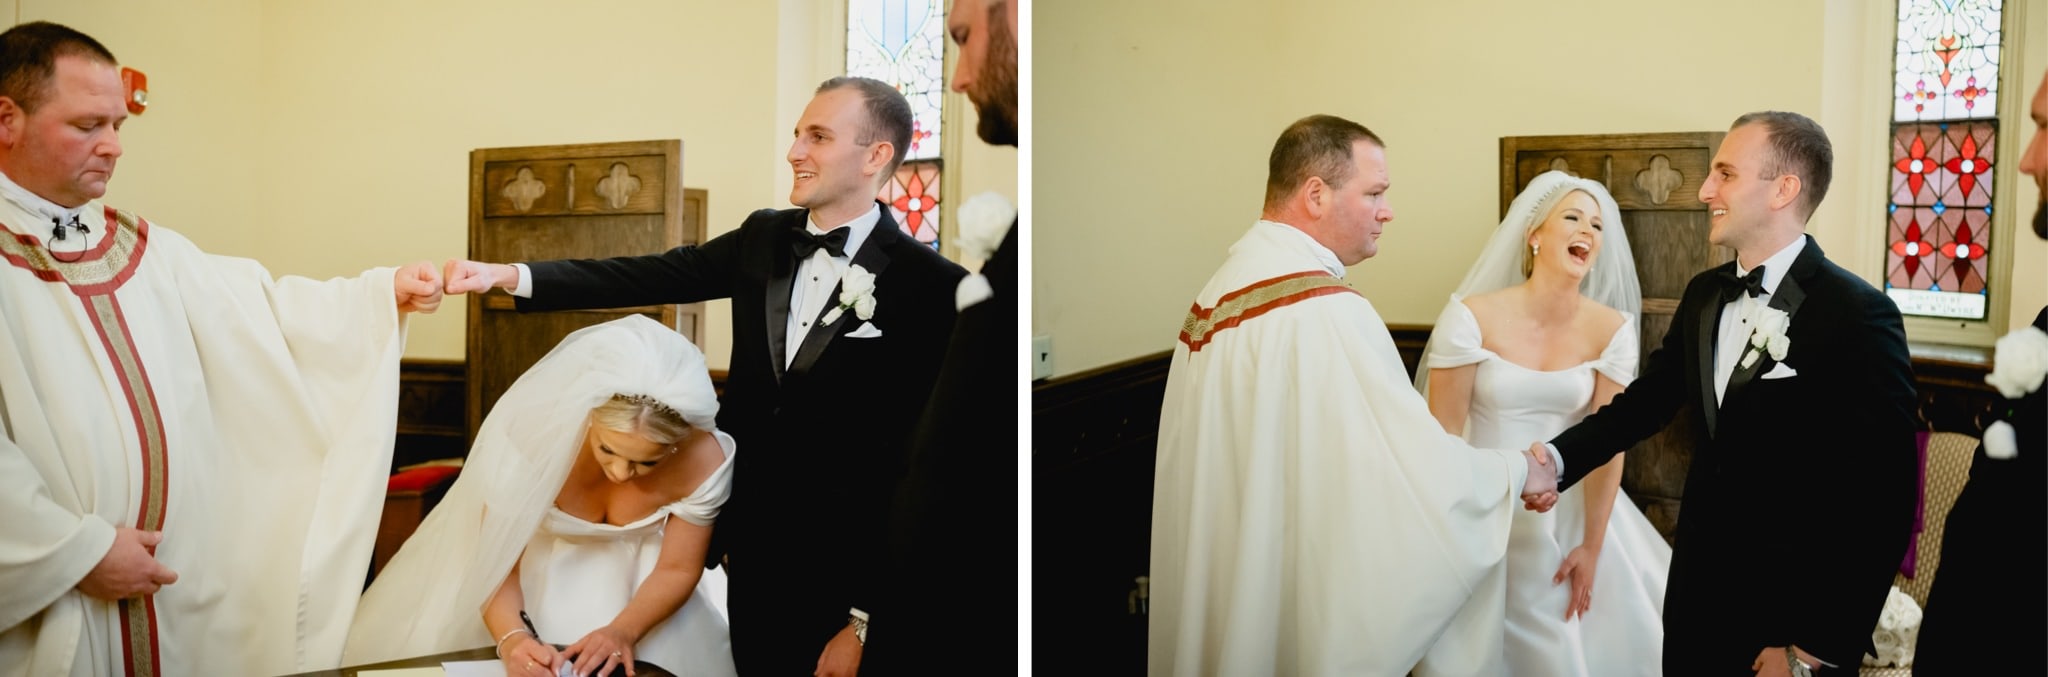 groom fist bumping priest